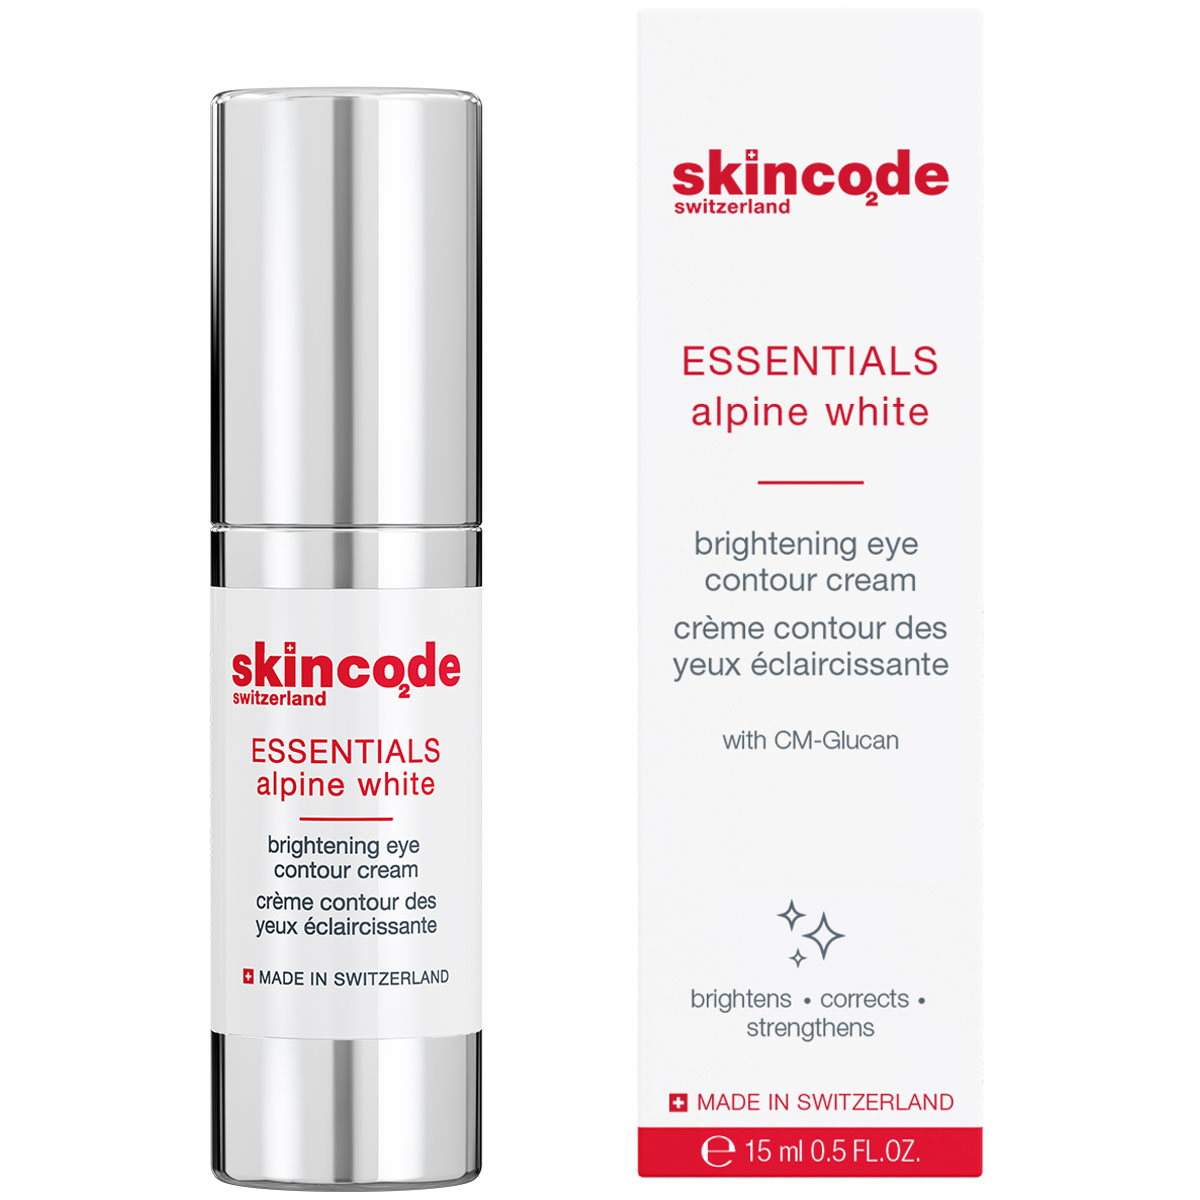 Skincode Осветляющий крем для контура глаз, 15 мл (Skincode, Essentials Alpine White) осветляющий крем для кожи вокруг глаз café